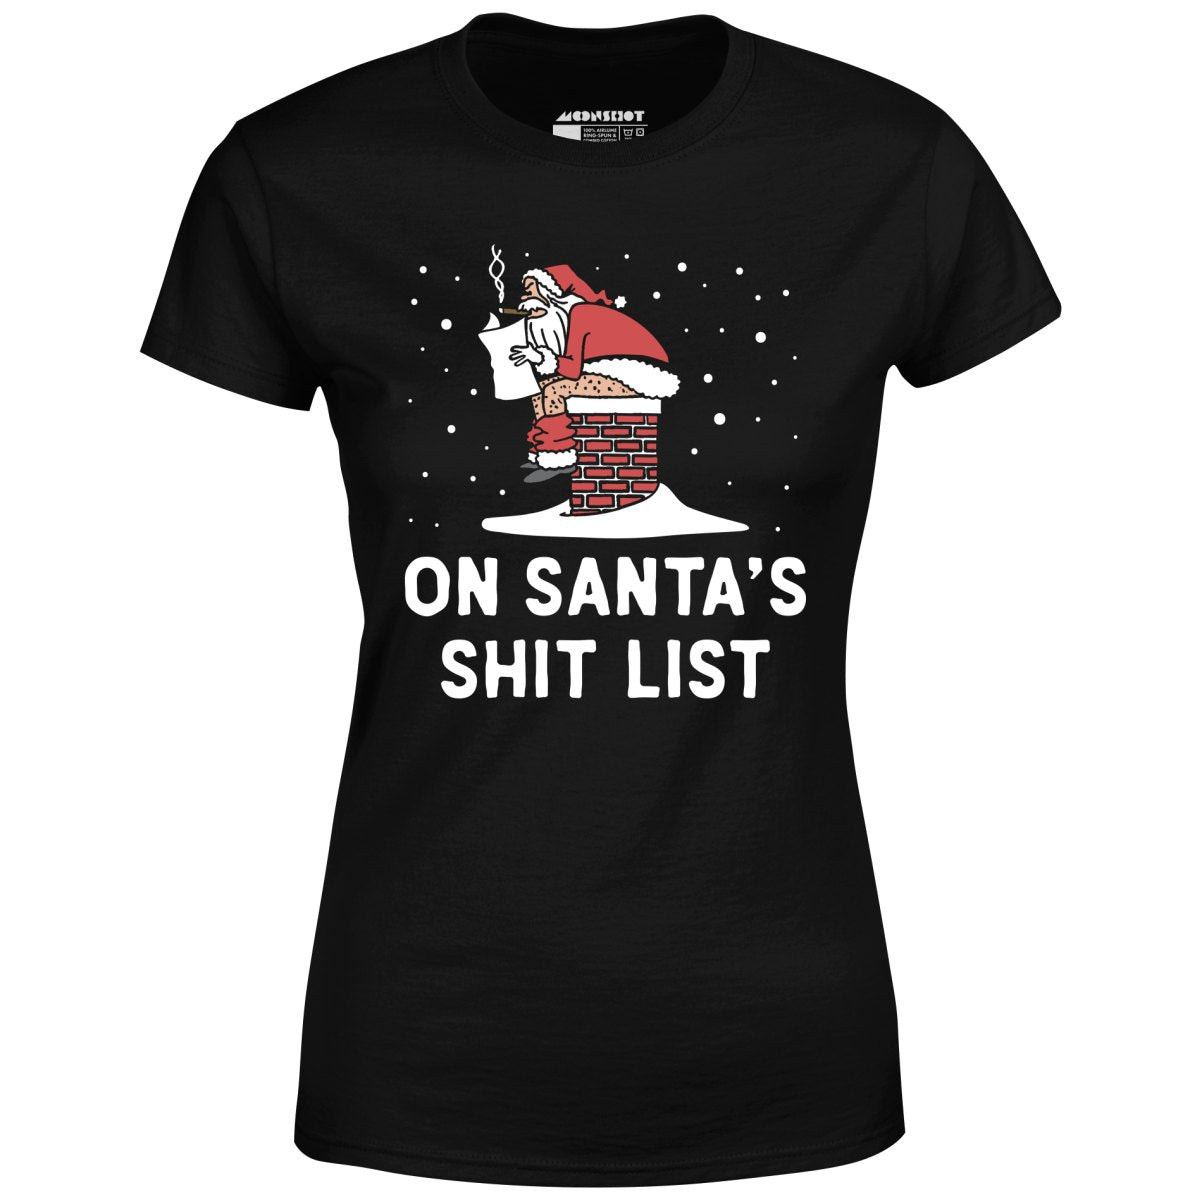 On Santa's Shit List - Women's T-Shirt